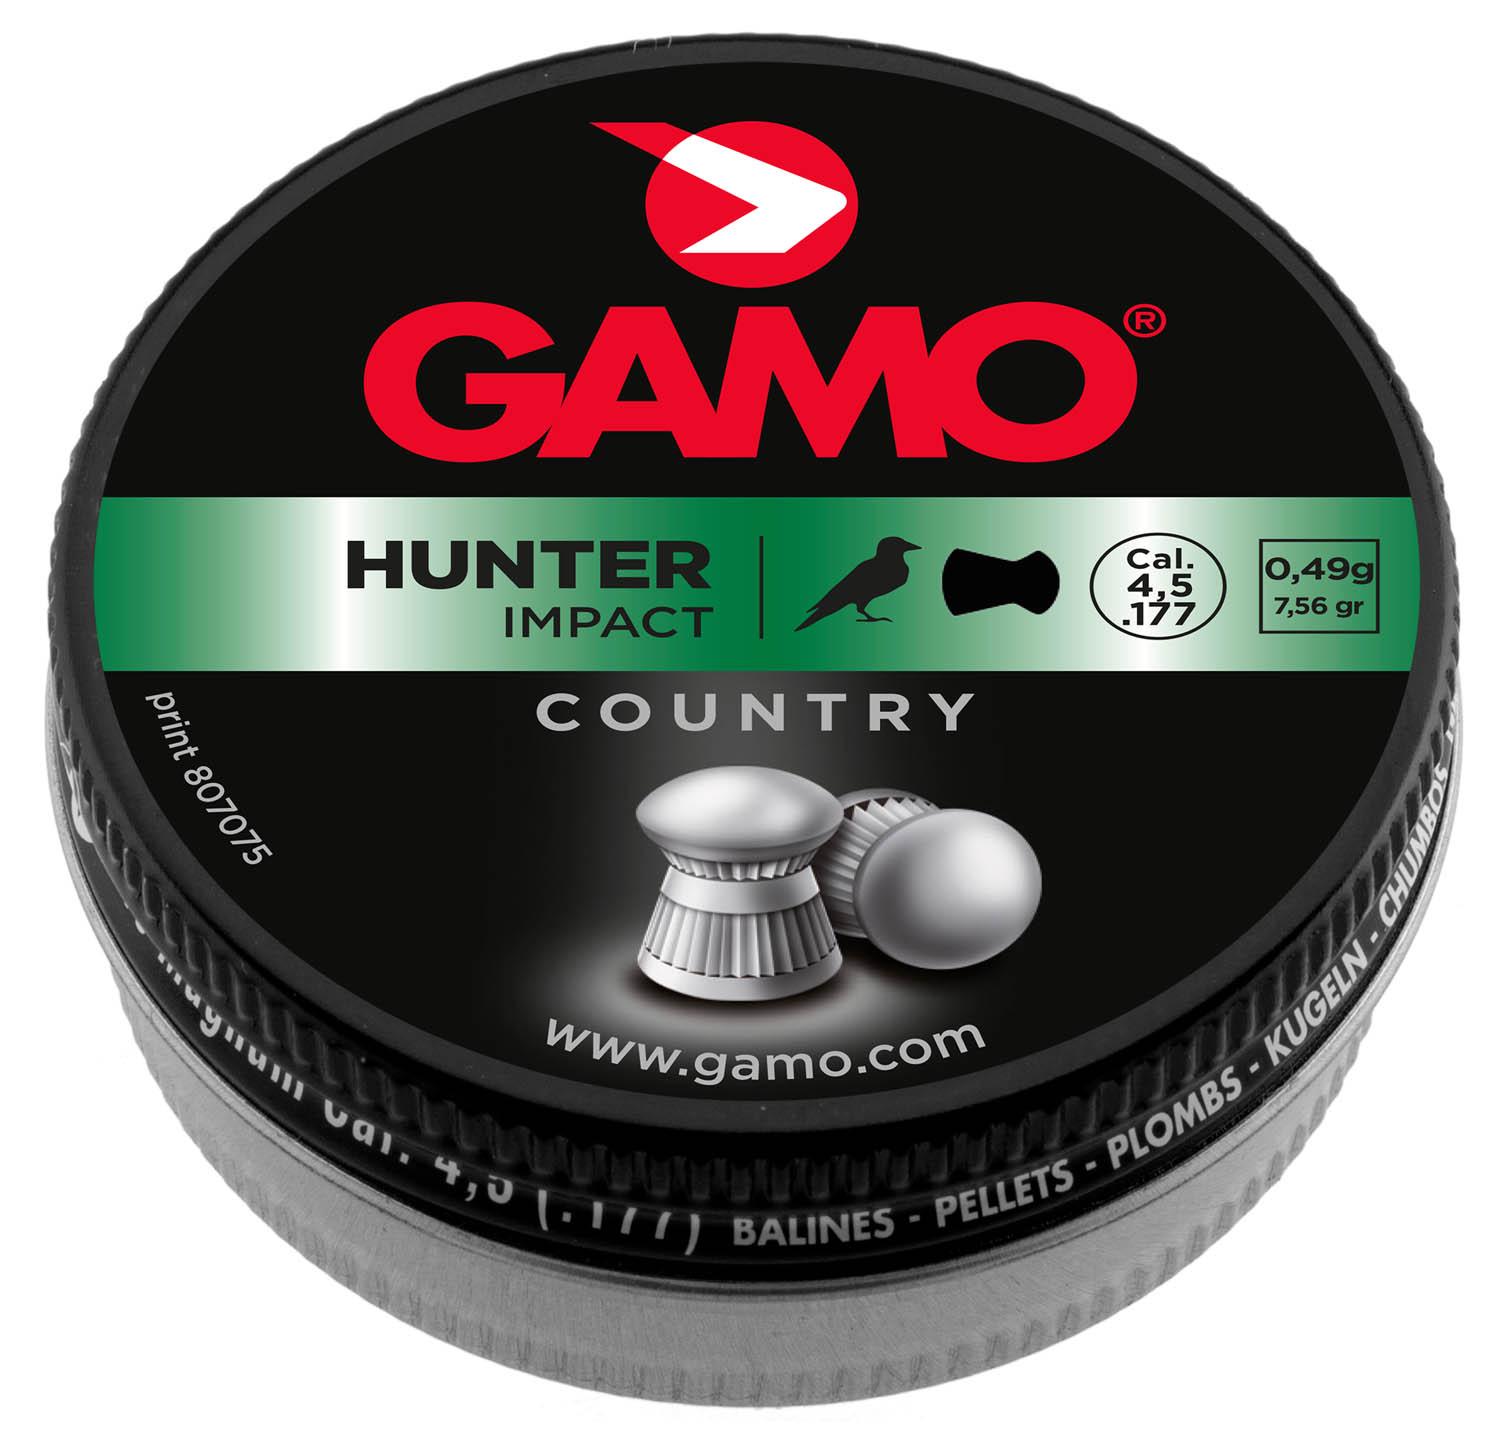 Balines GAMO Hunter Impact 4.5 mm